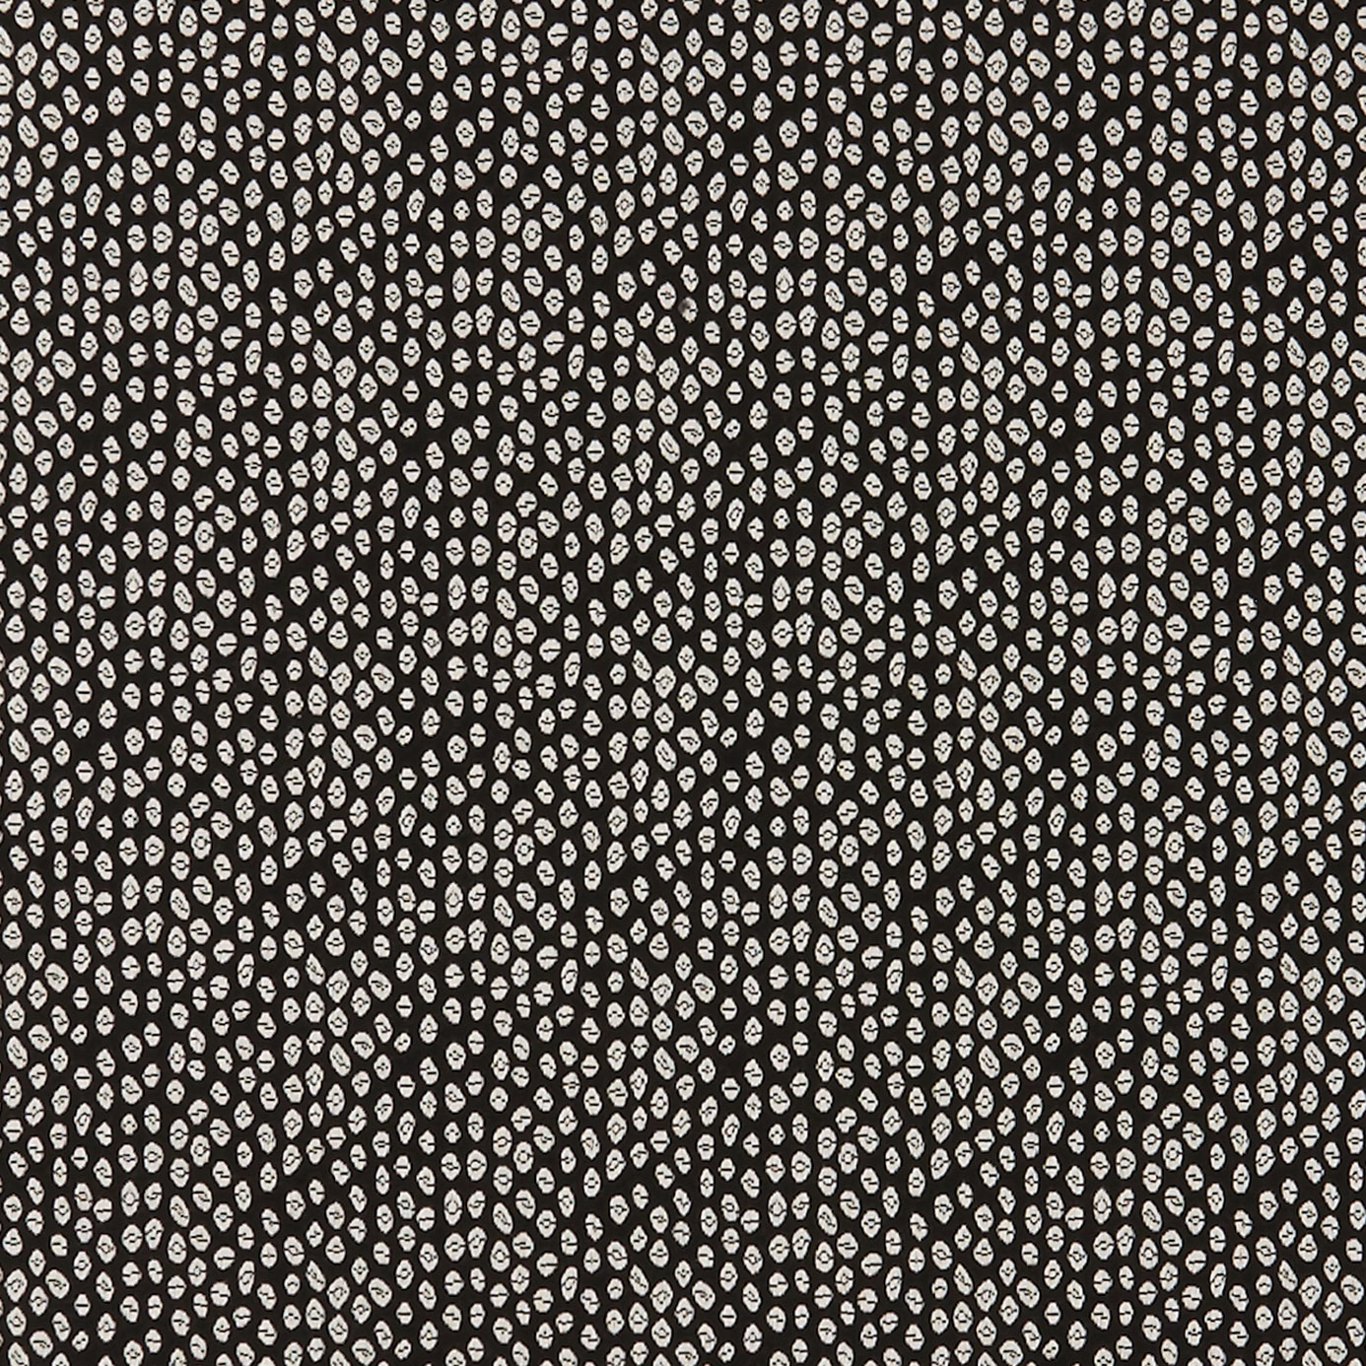 BW1015 Black/White Fabric by CNC